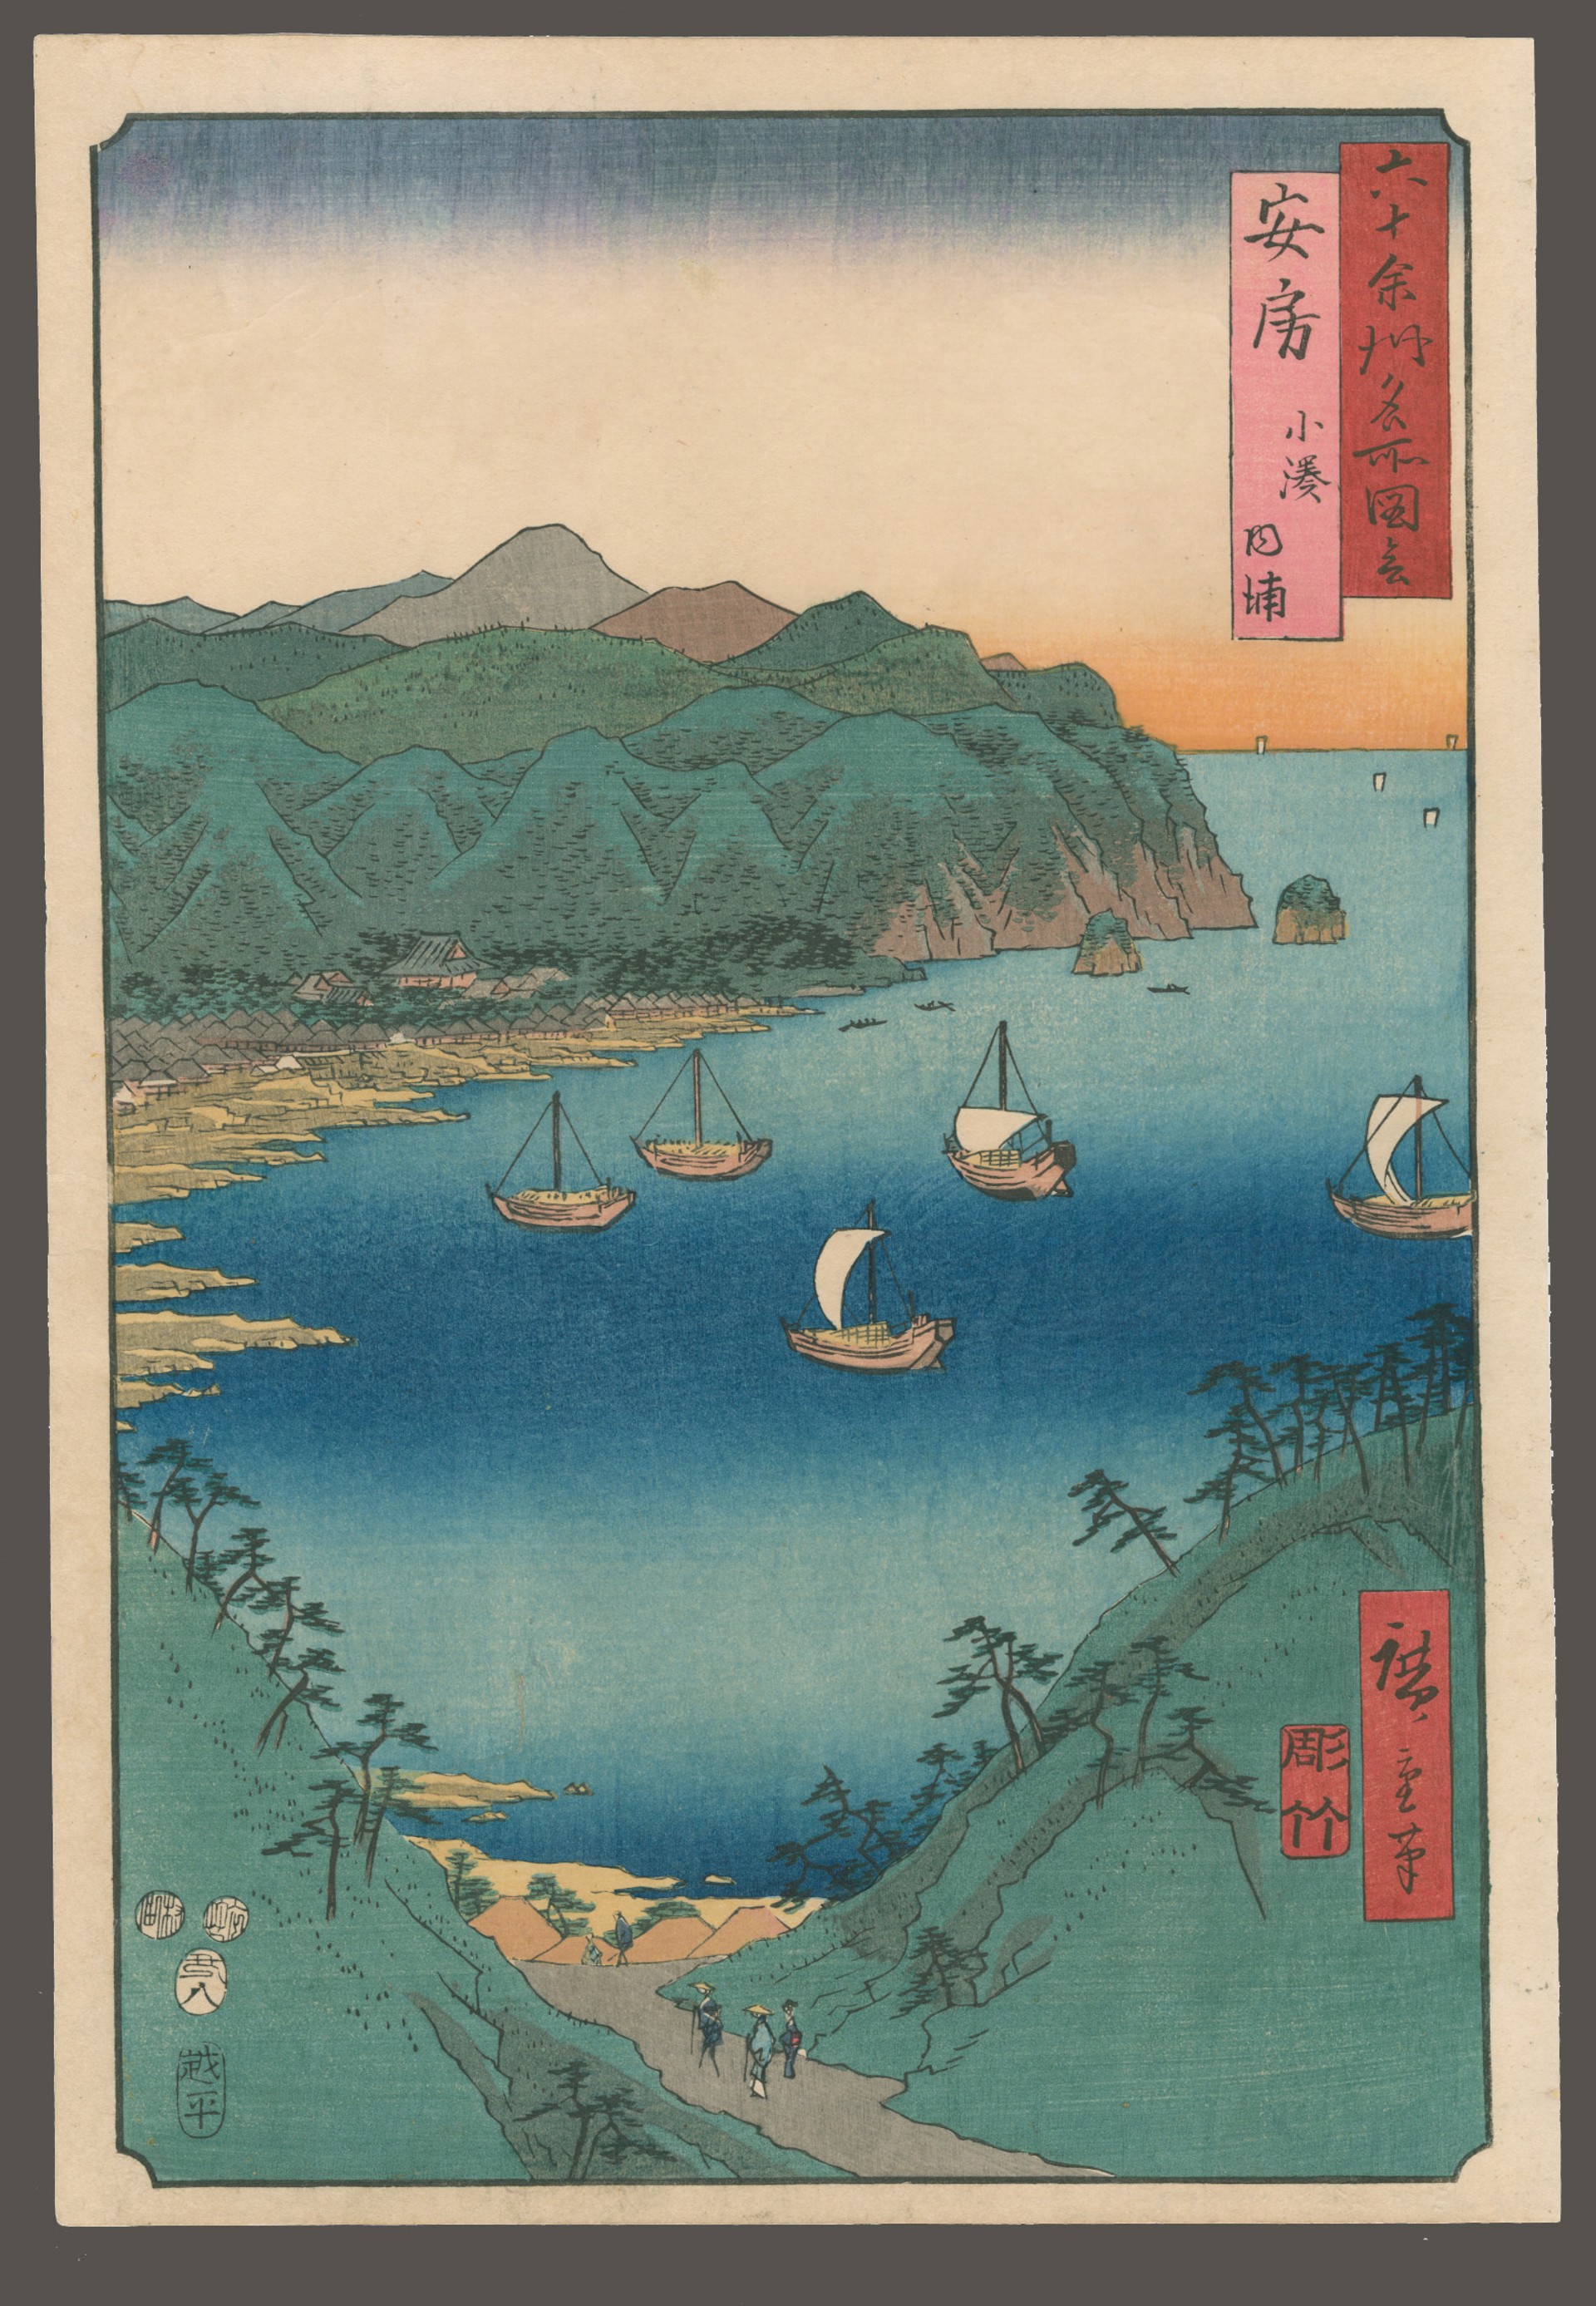 #18 Uchiura and Kominato in Awa Province Famous Views of 60 Odd Provinces by Hiroshige